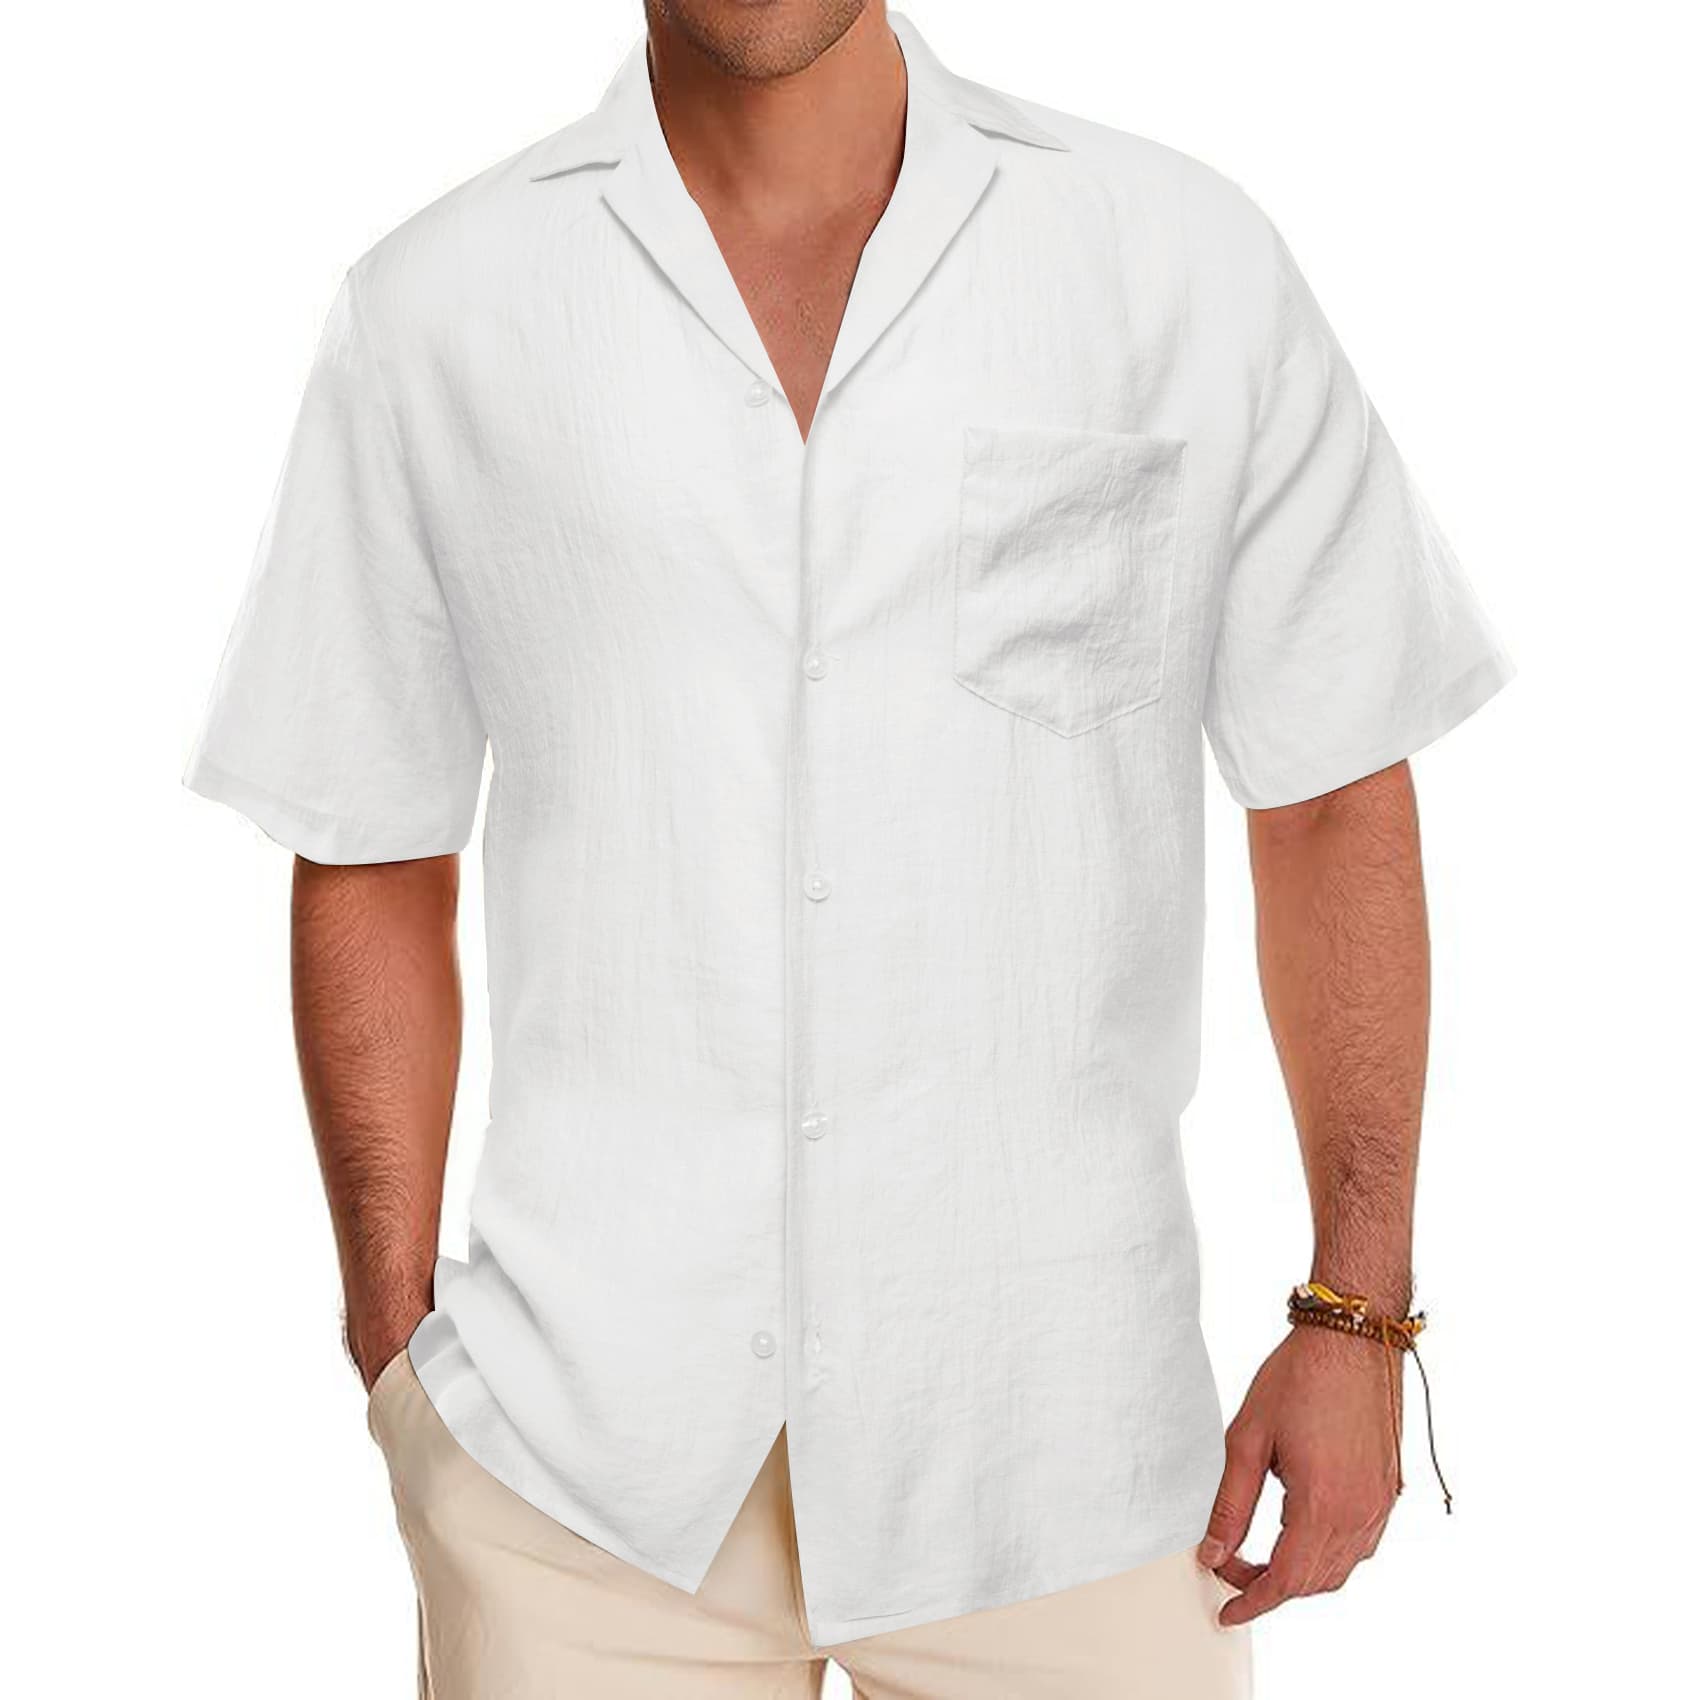 short sleeve button up men's white shirt s